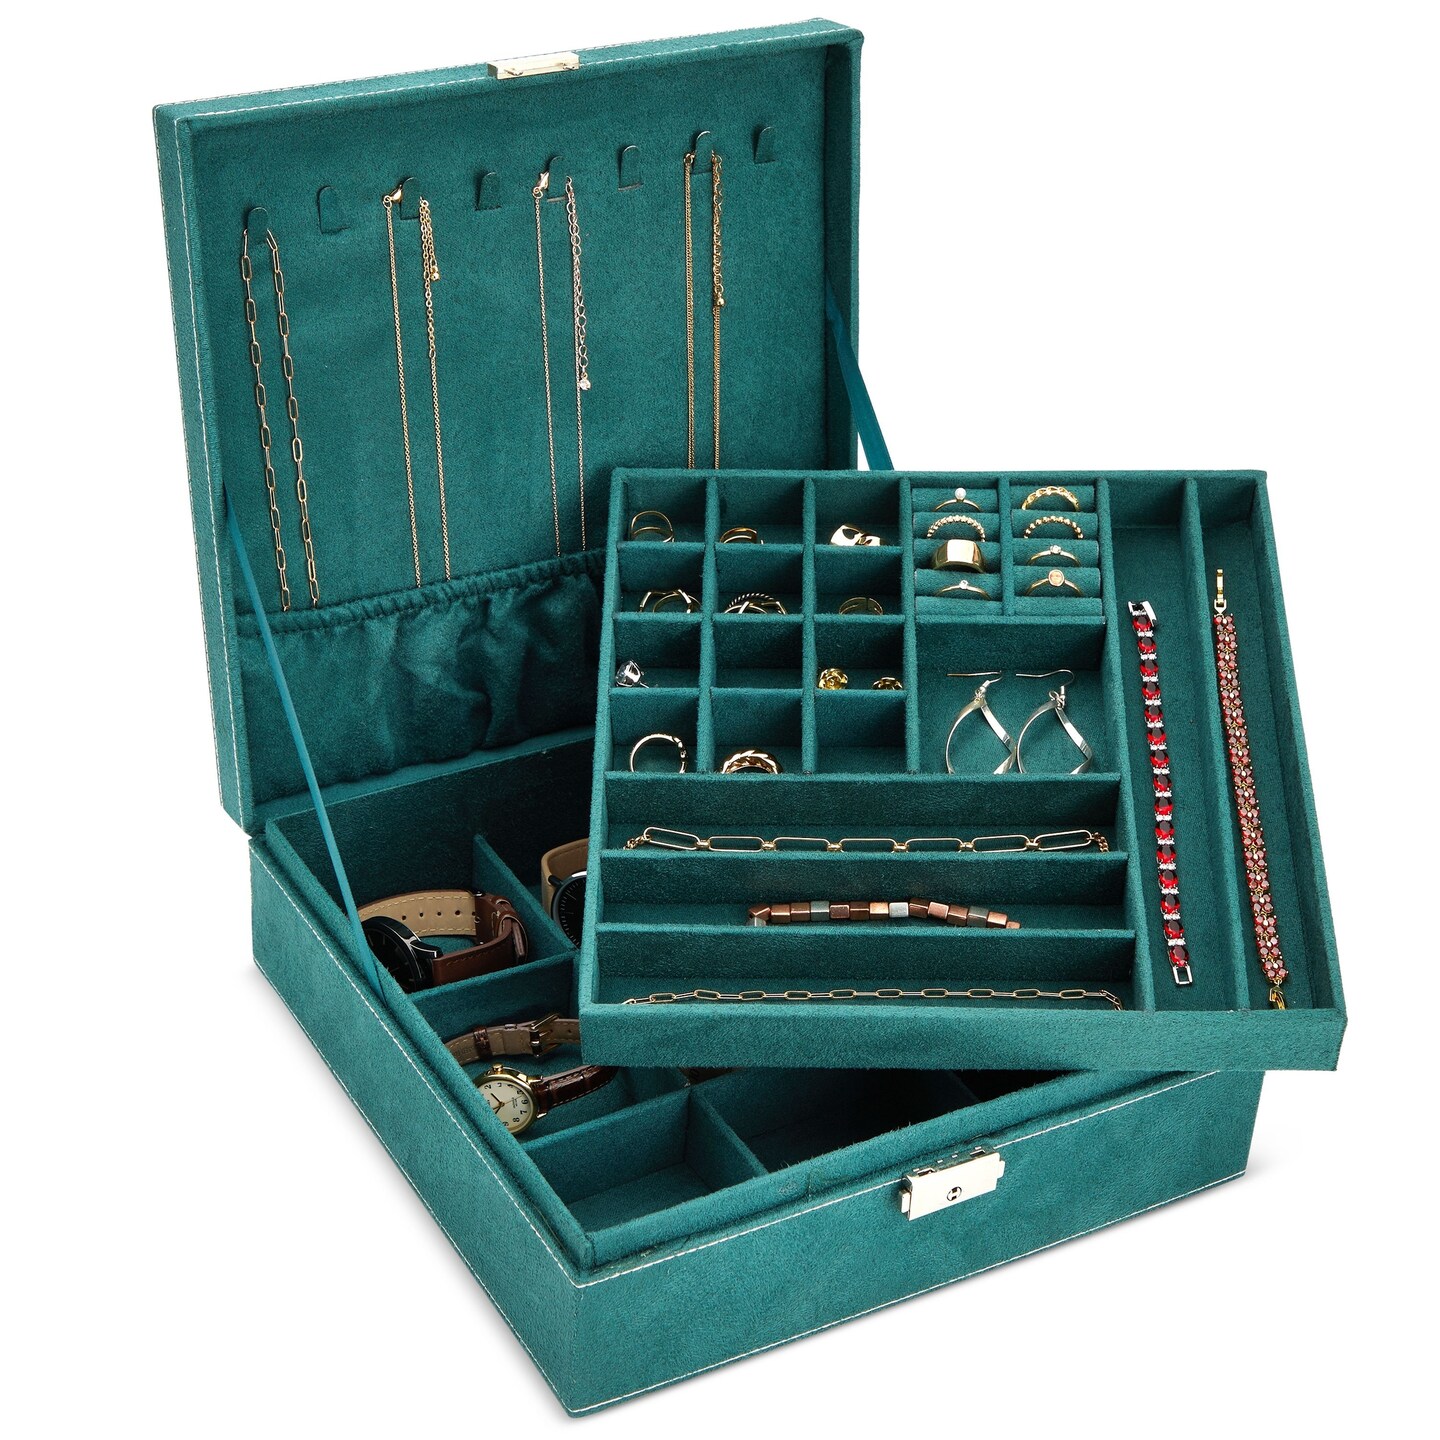 Jewellery Storage Box Girls Rings Necklaces Display Organiser Storage Case  - Games & Hobbies > Giftware